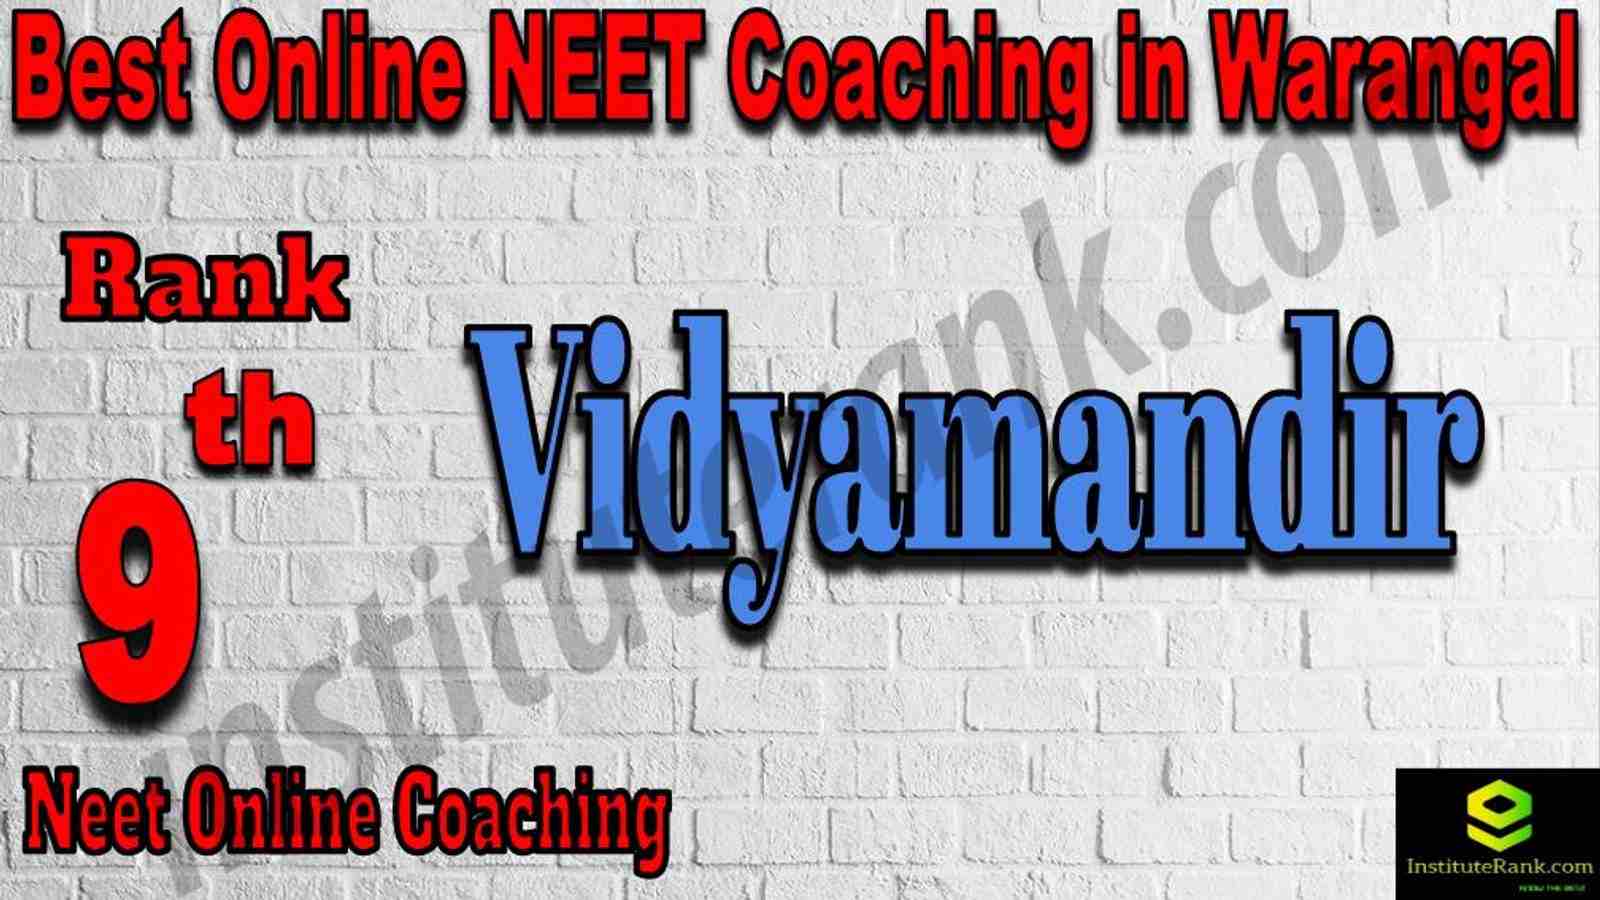 9th Best Online Neet Coaching in Warangal